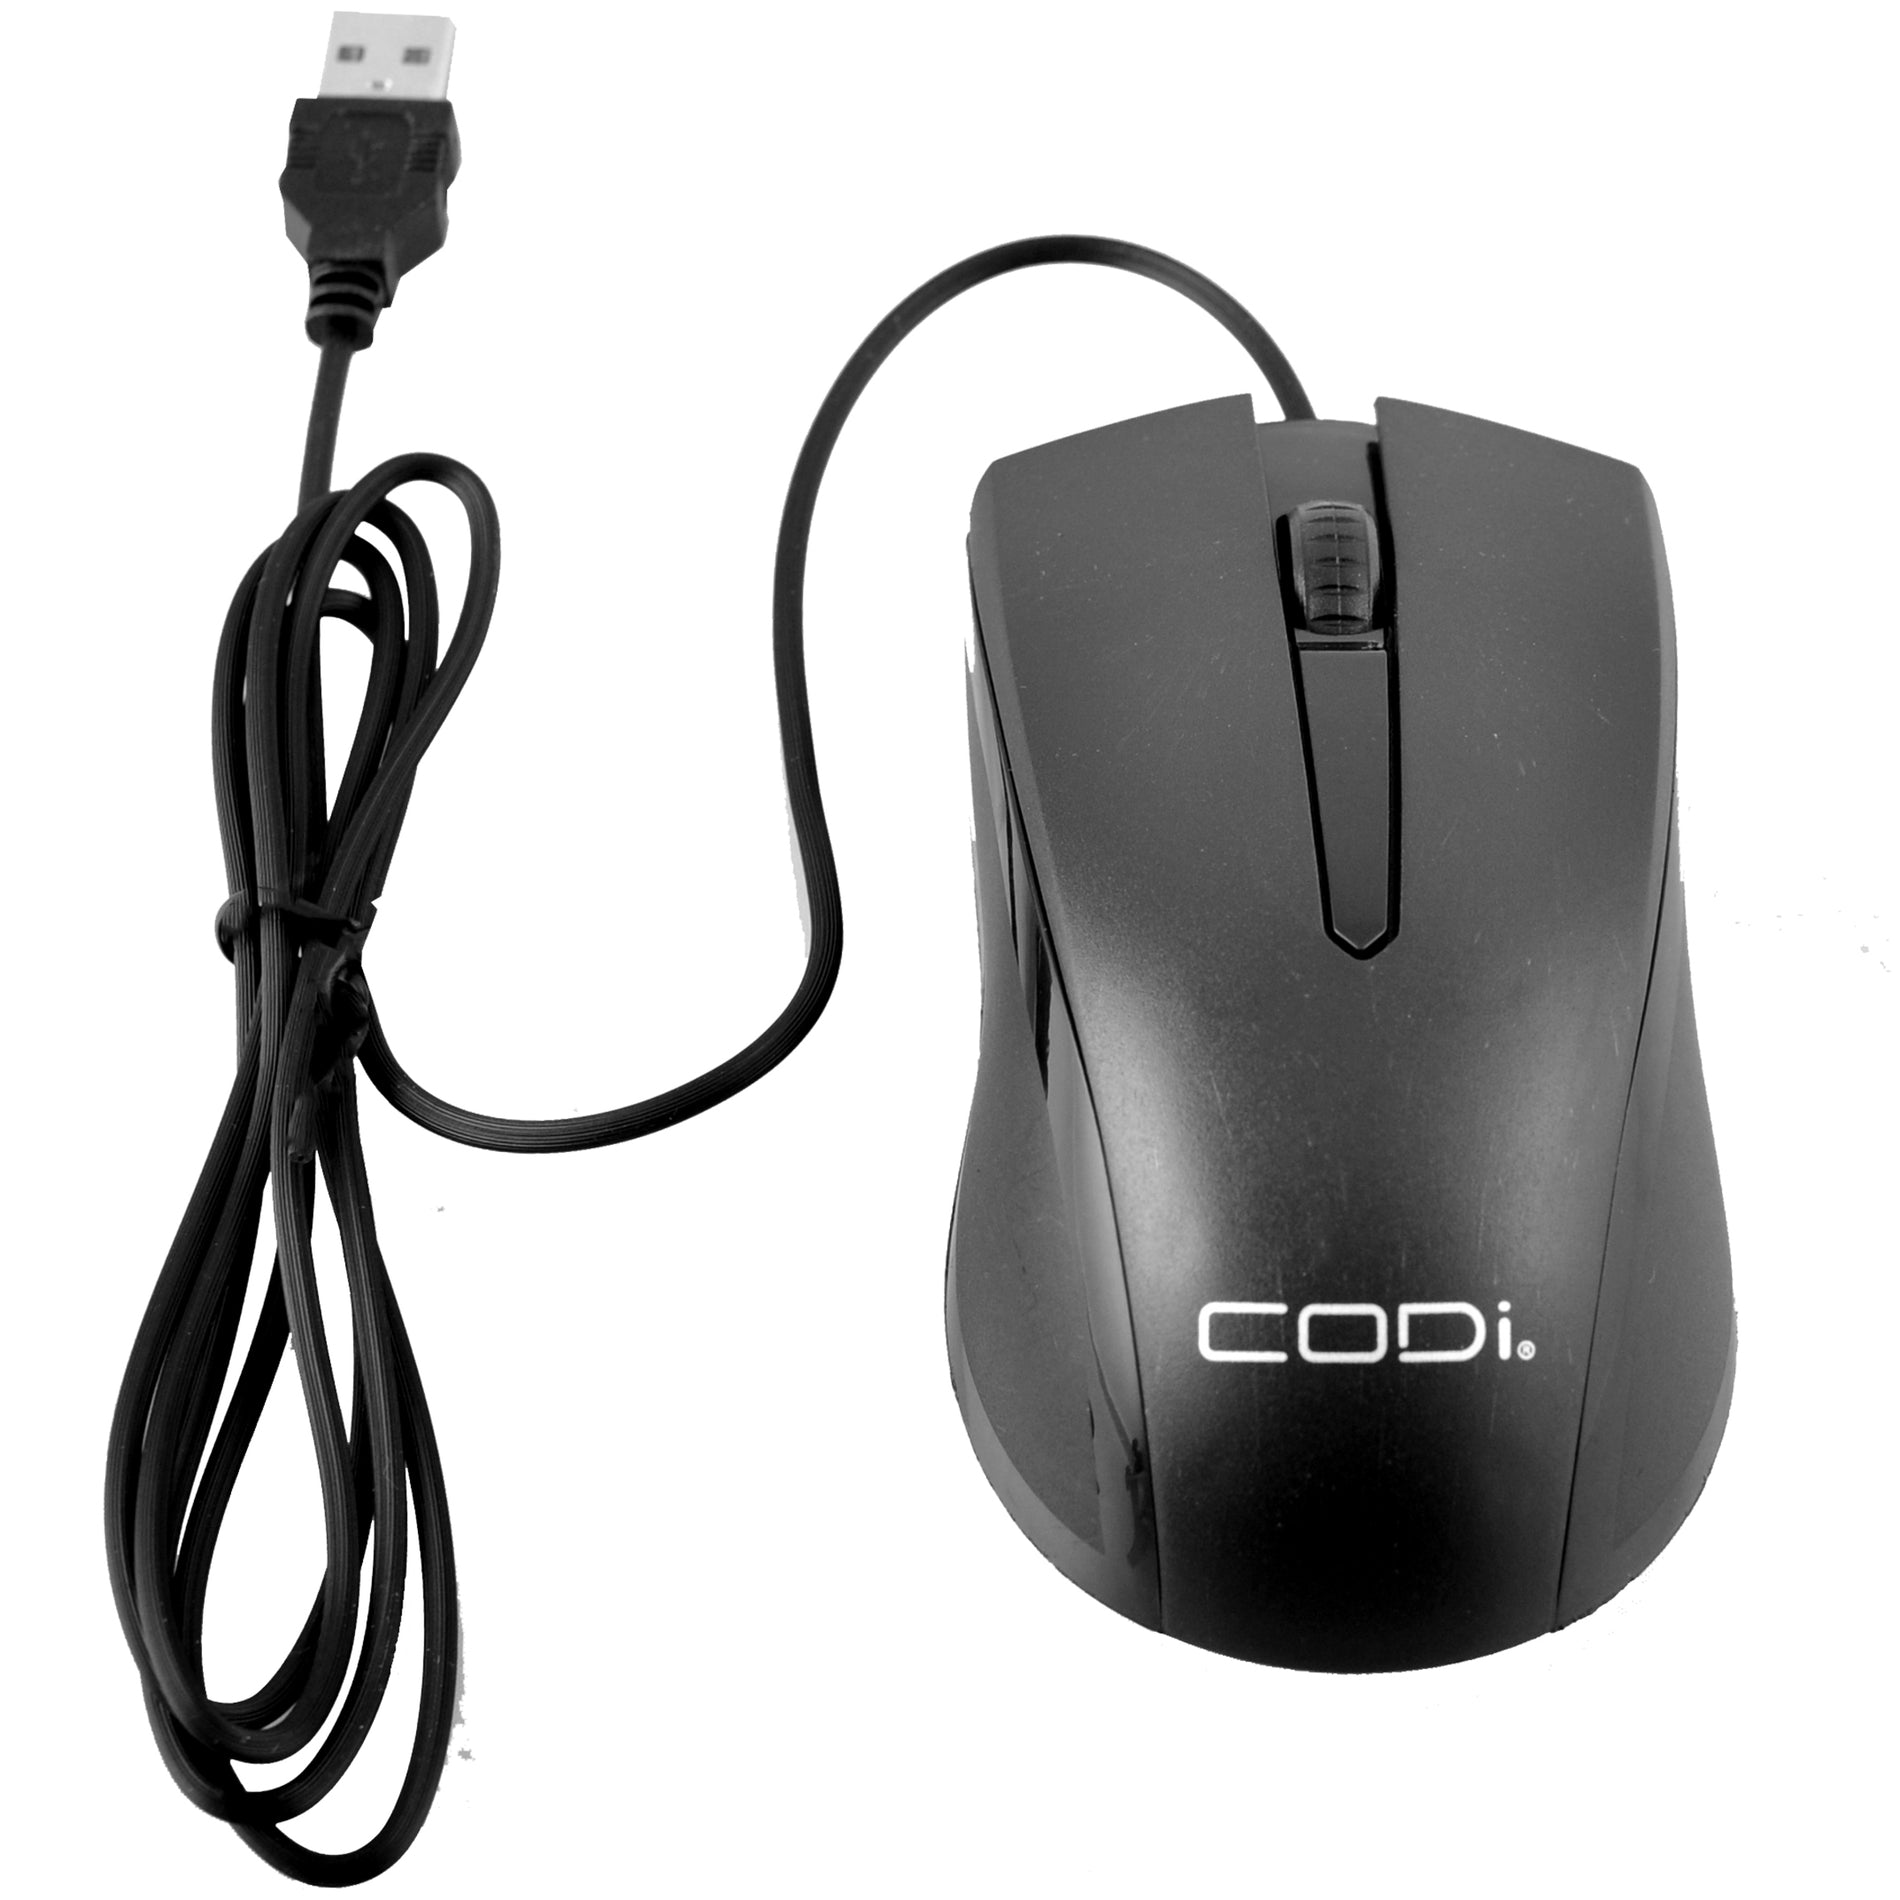 CODi A05017 Wired USB Optical Mouse, Ergonomic Fit, 1200 dpi, Scroll Wheel